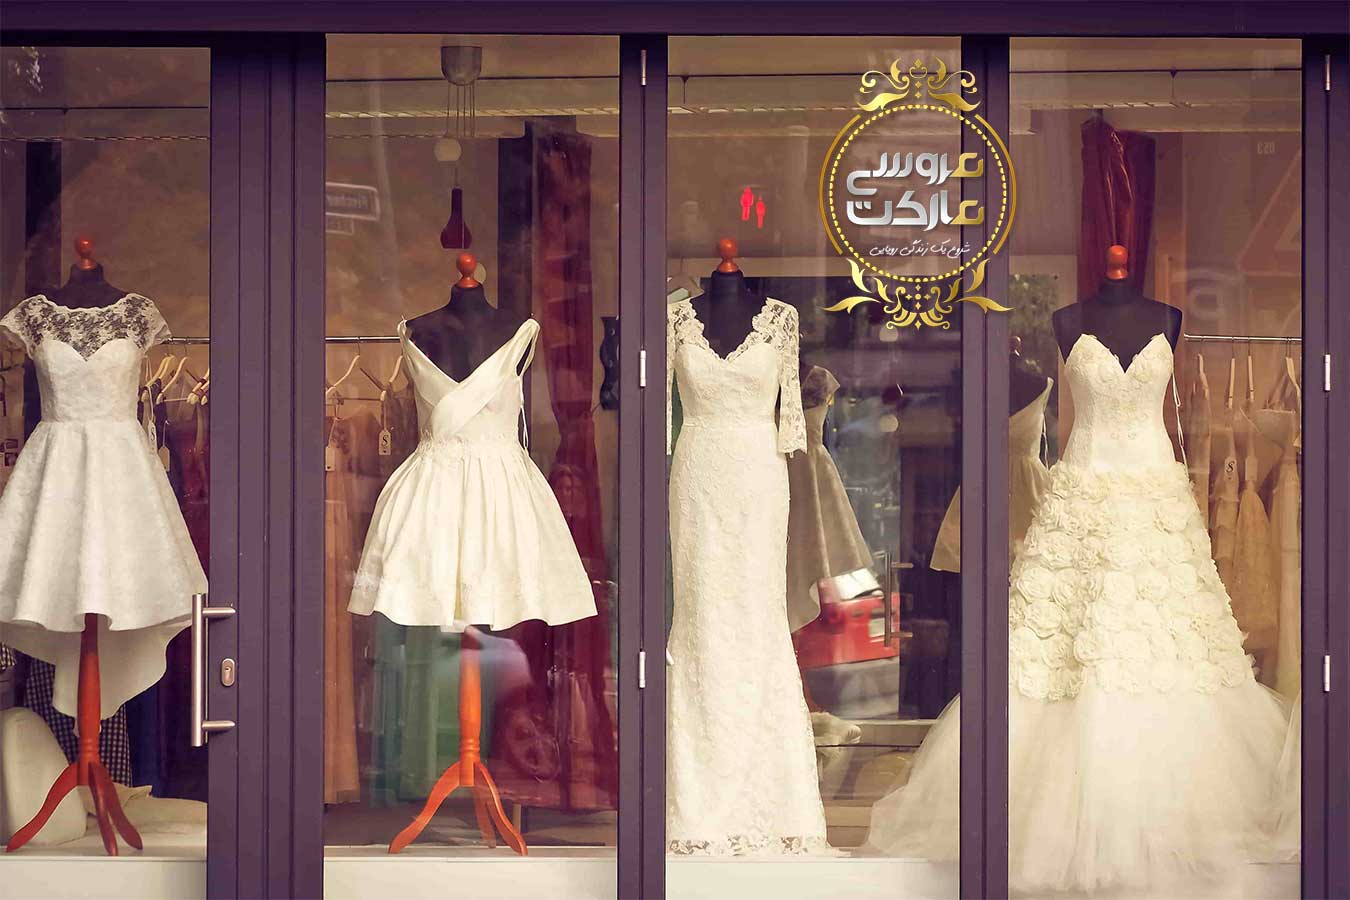 ویترین یک مزون لباس عروس در مزون لباس عروس خیابان امیر اکرم تهران